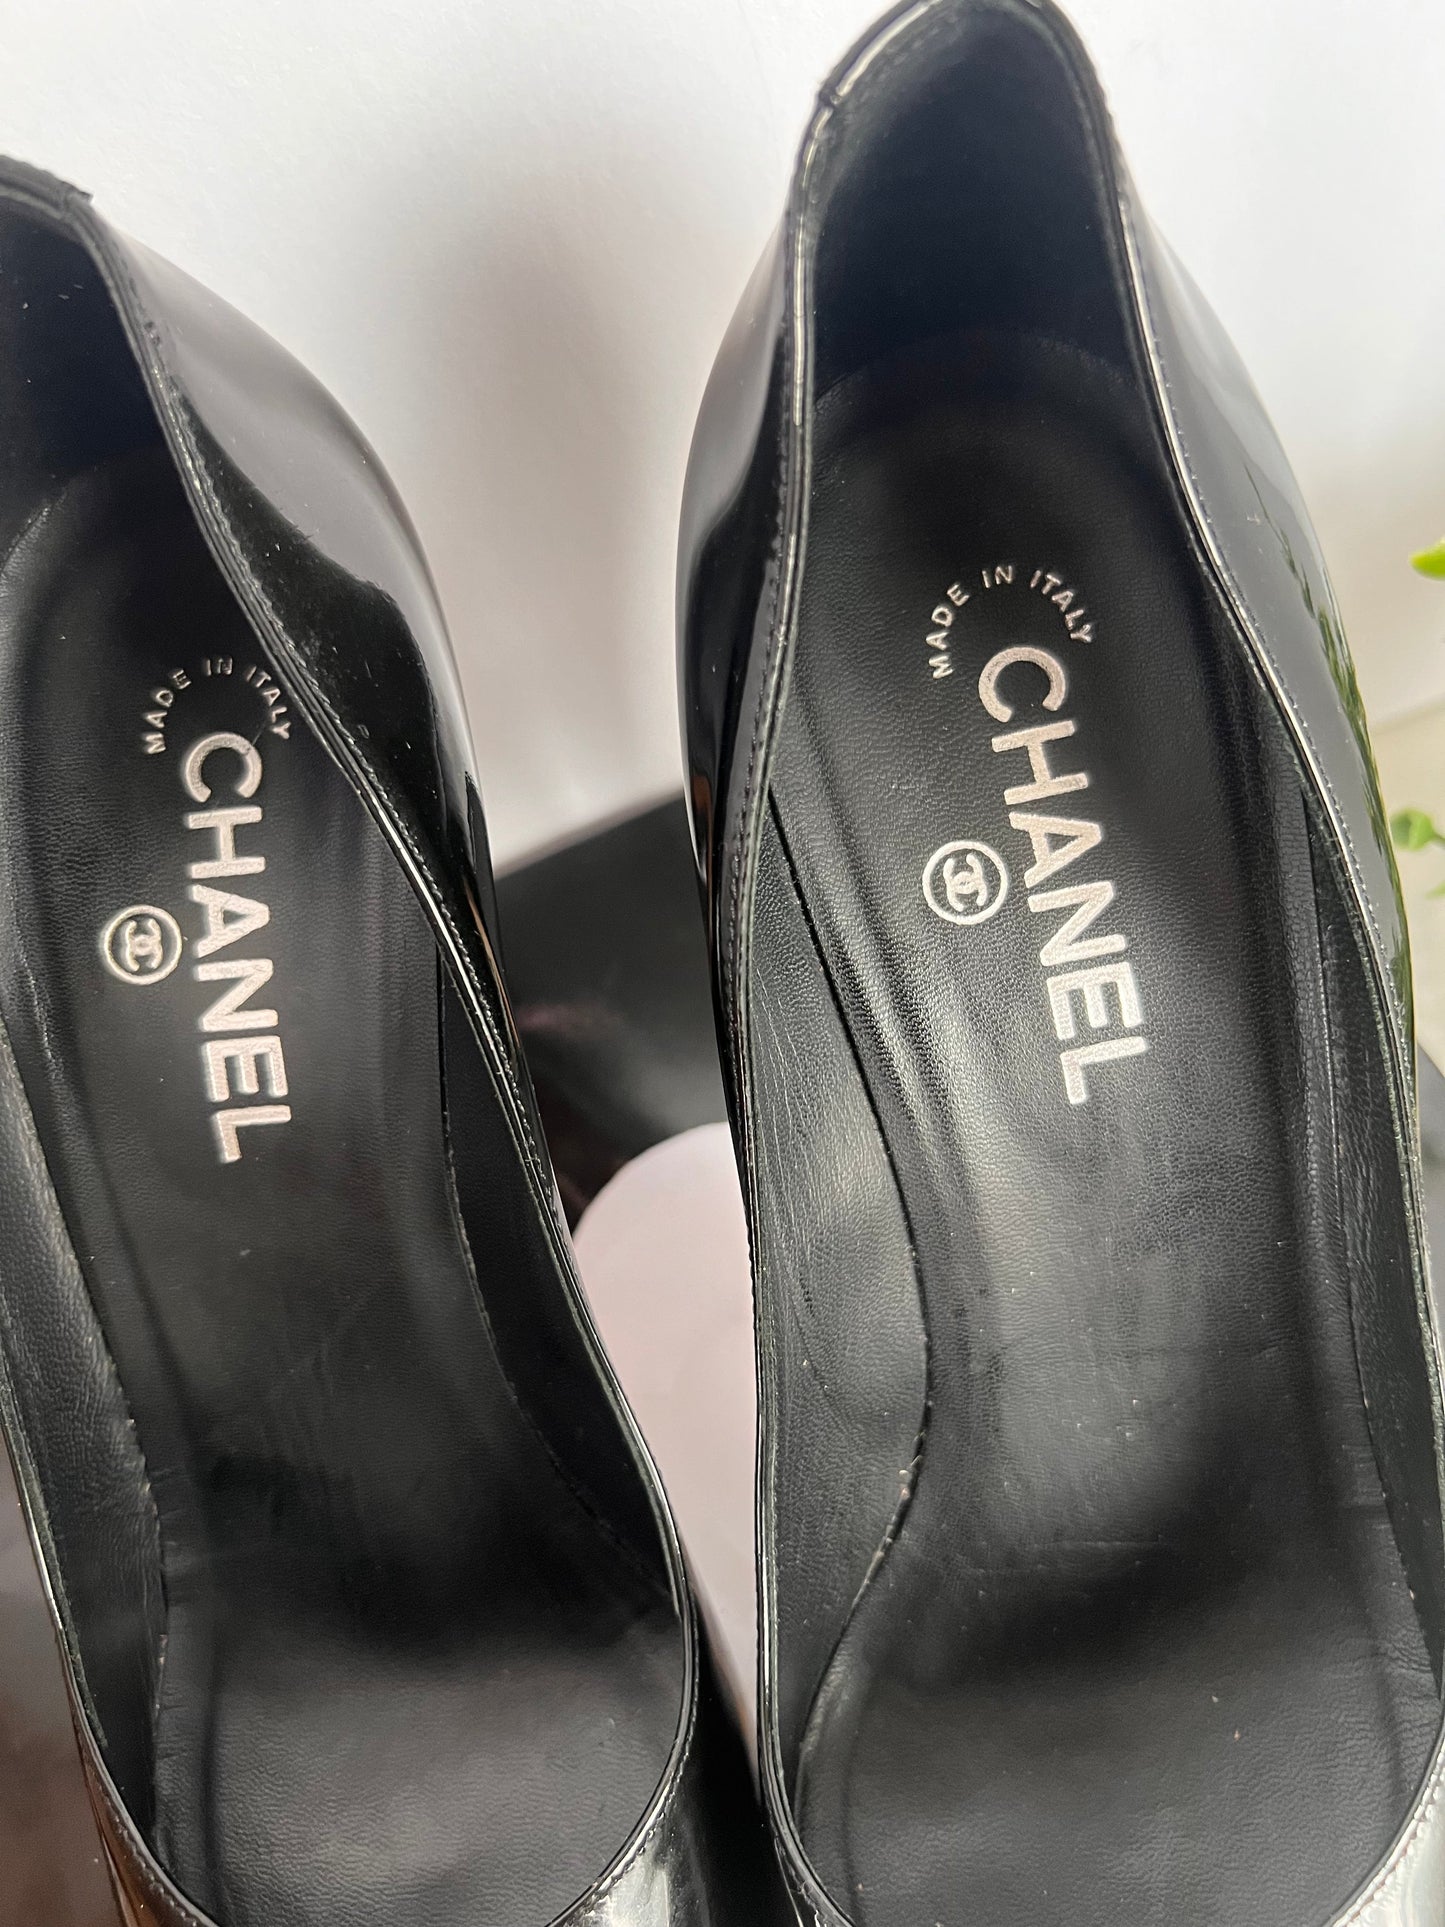 Chanel Black Patent Cap Toe Pump Size 41